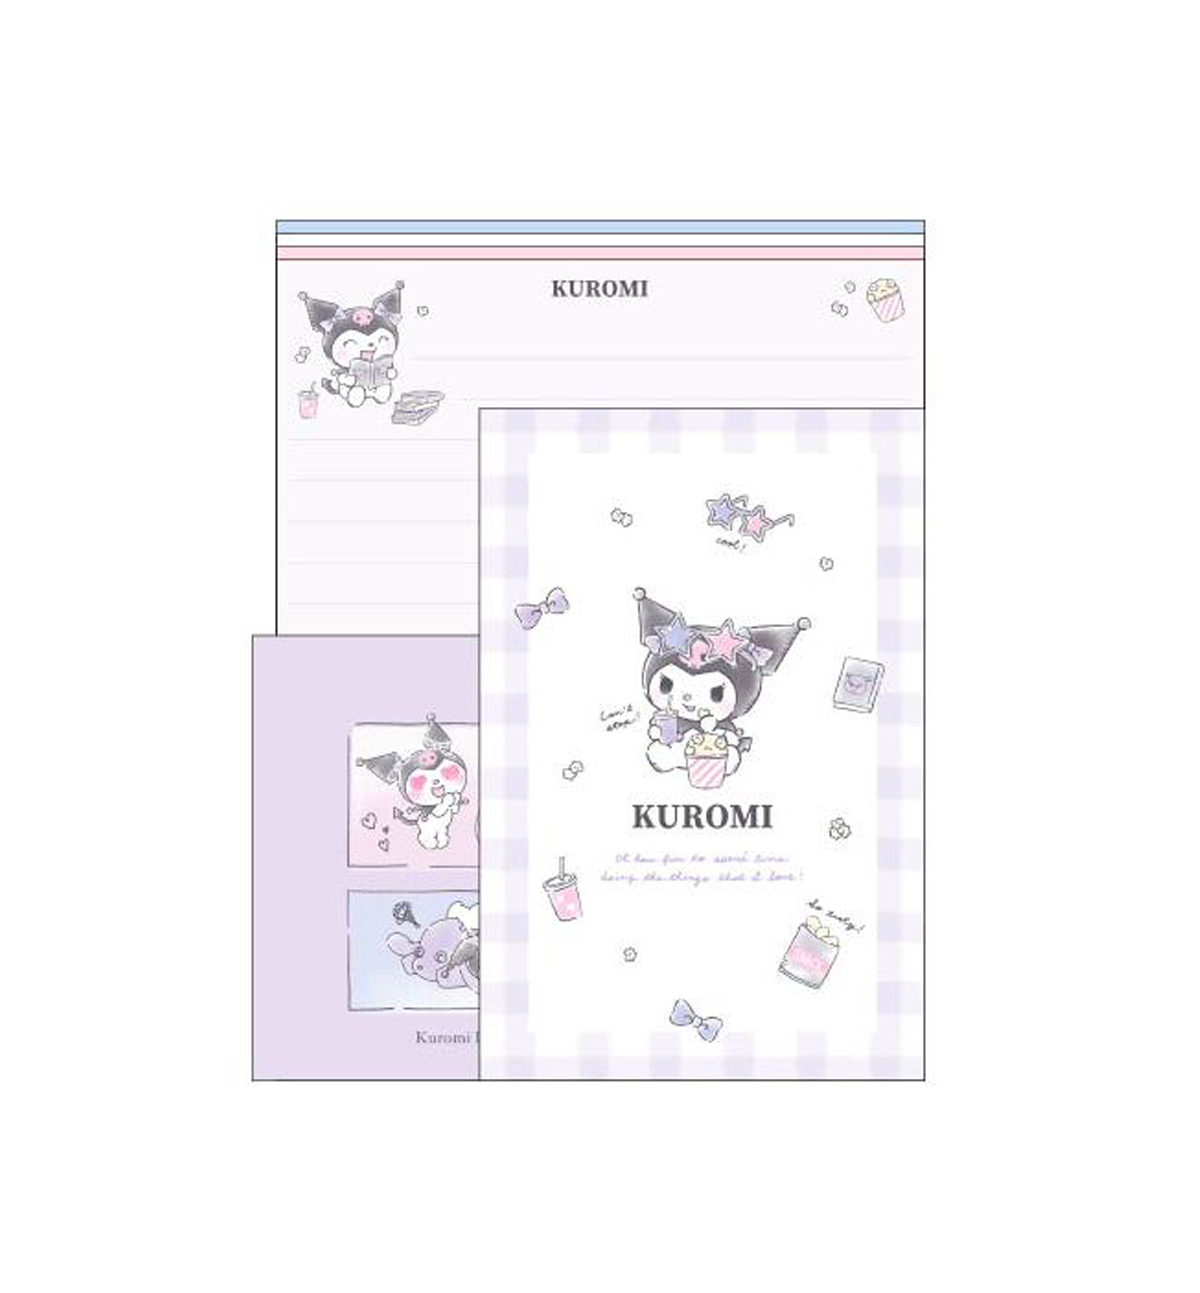 Sanrio Kuromi Letter Set [Side by Side]